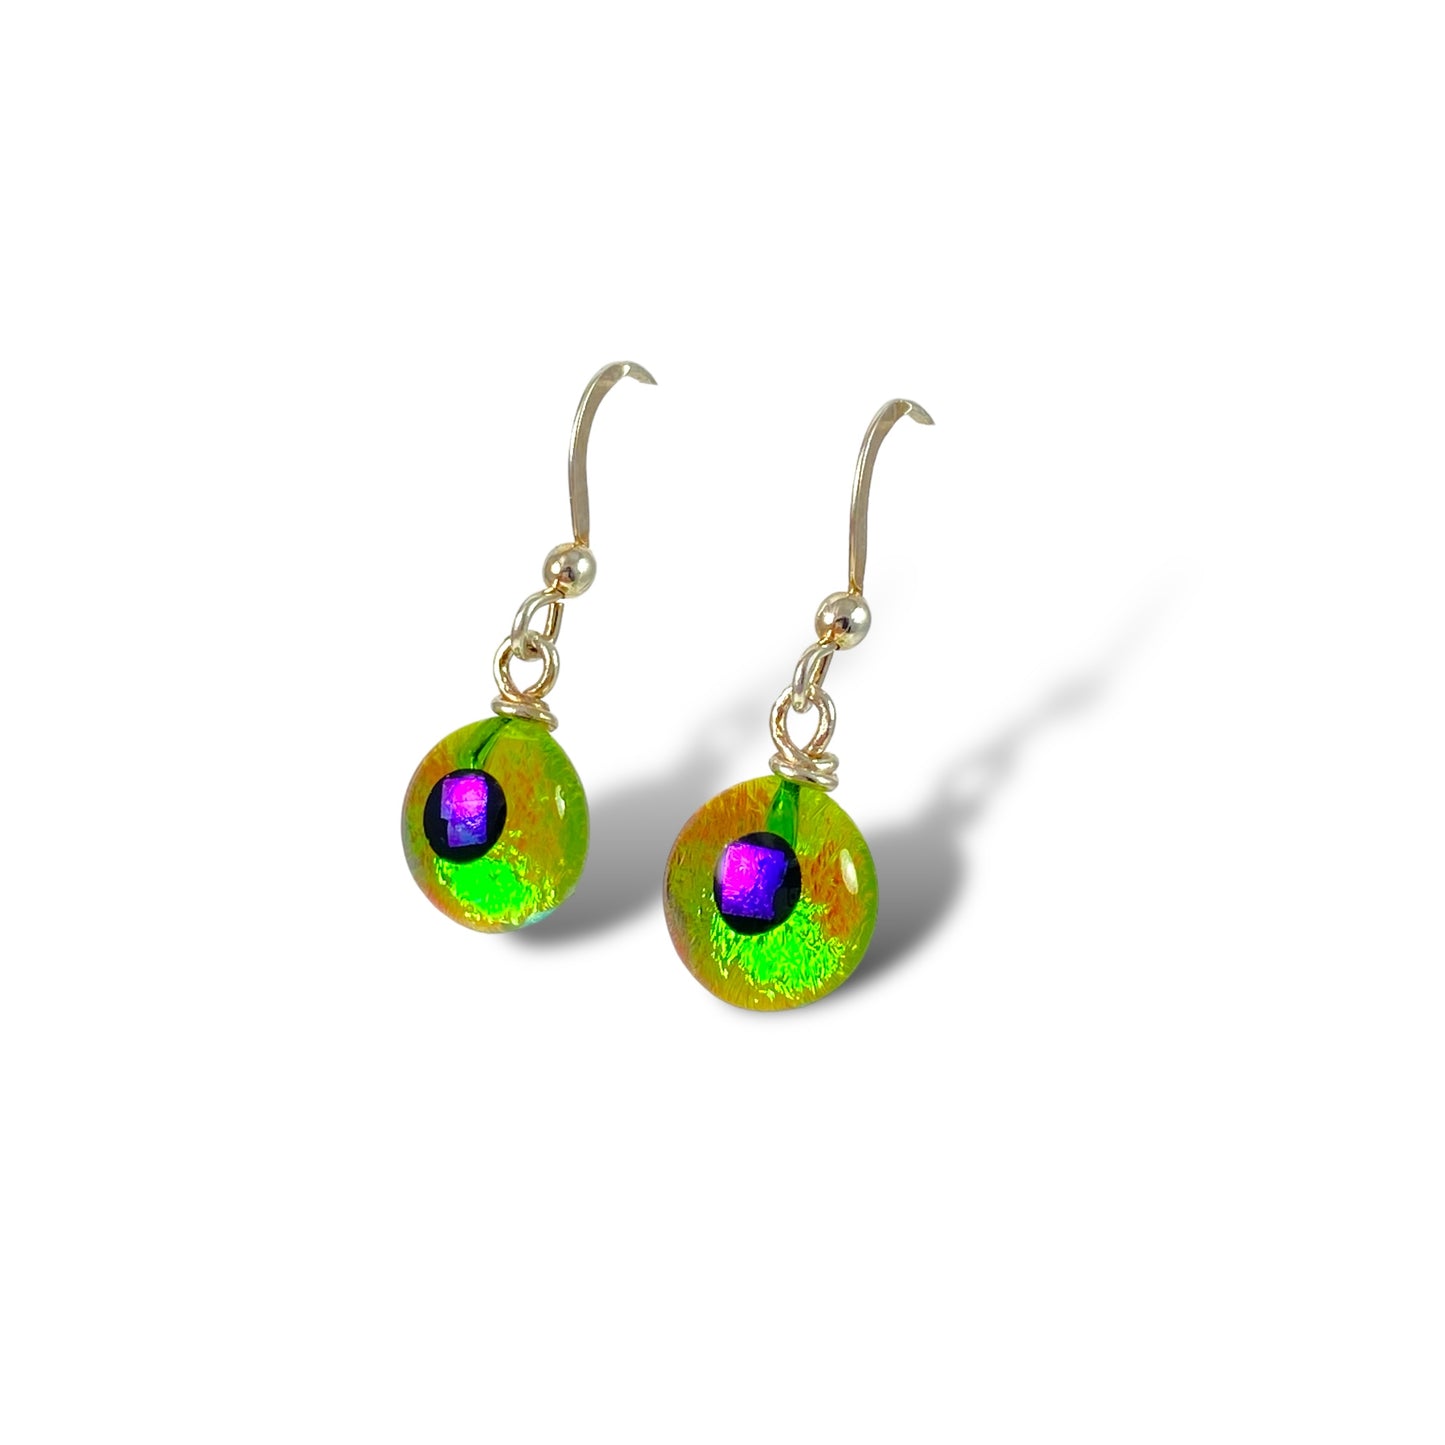 Space Ball Earrings in Citron Green